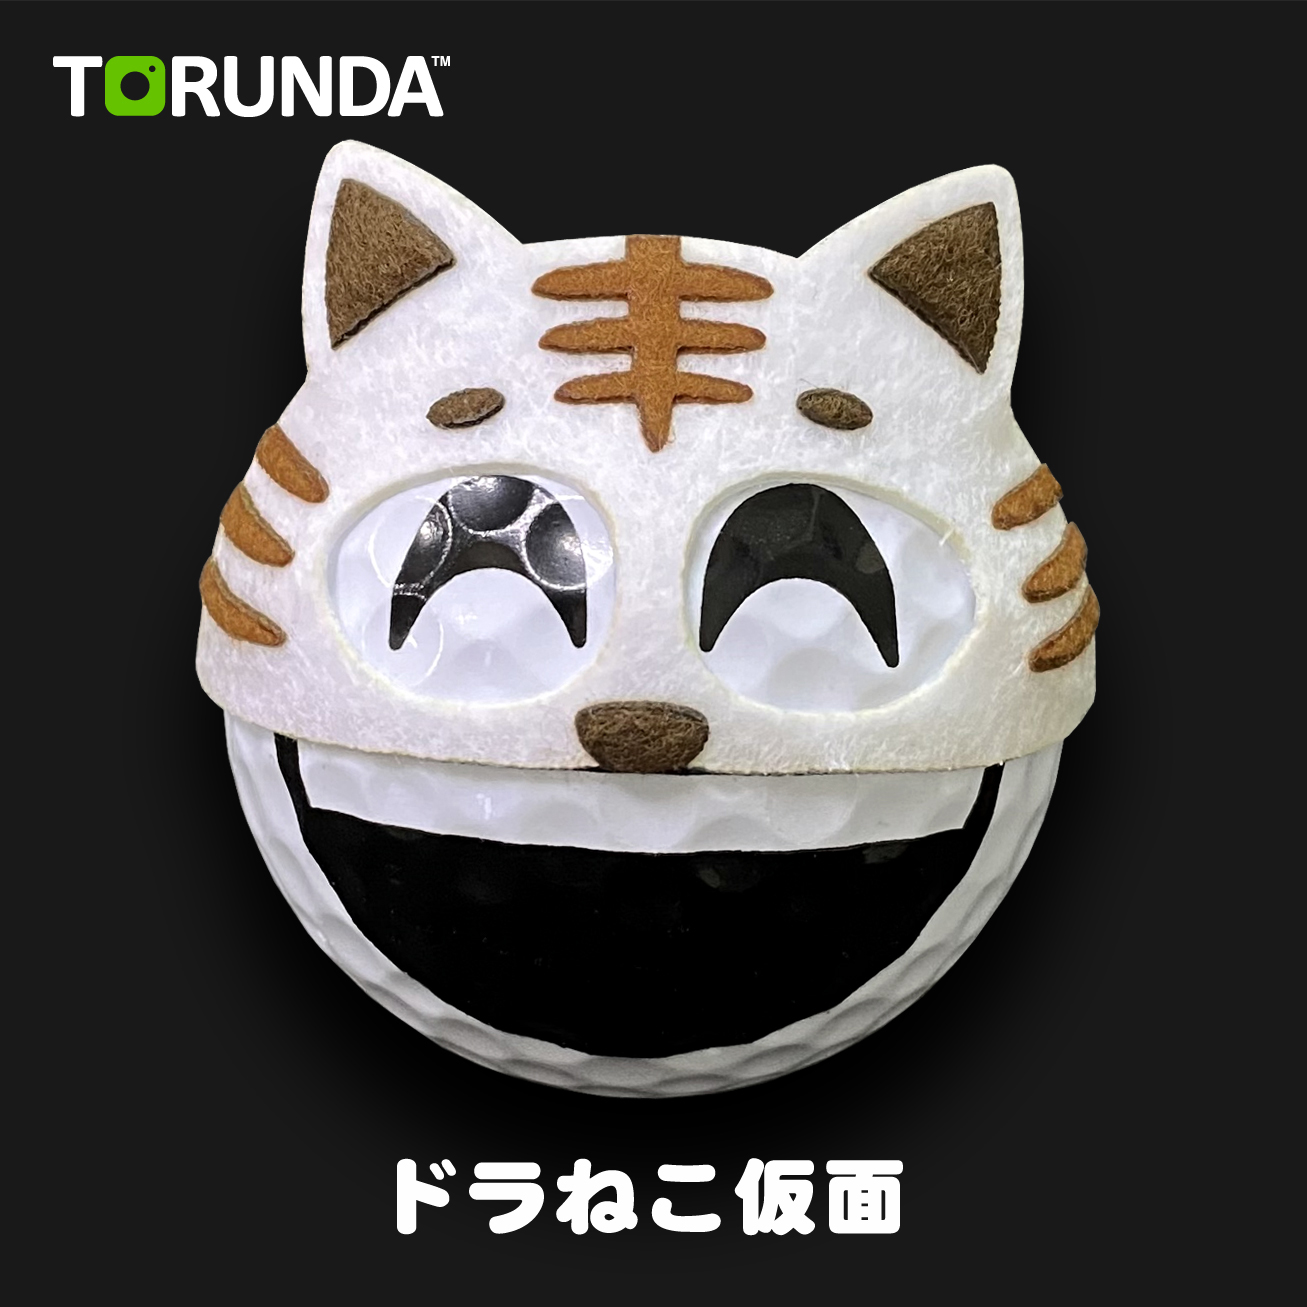 TORUNDA 撮るんだ かわいい 可愛い ゴルフボール用 ドラねこ仮面